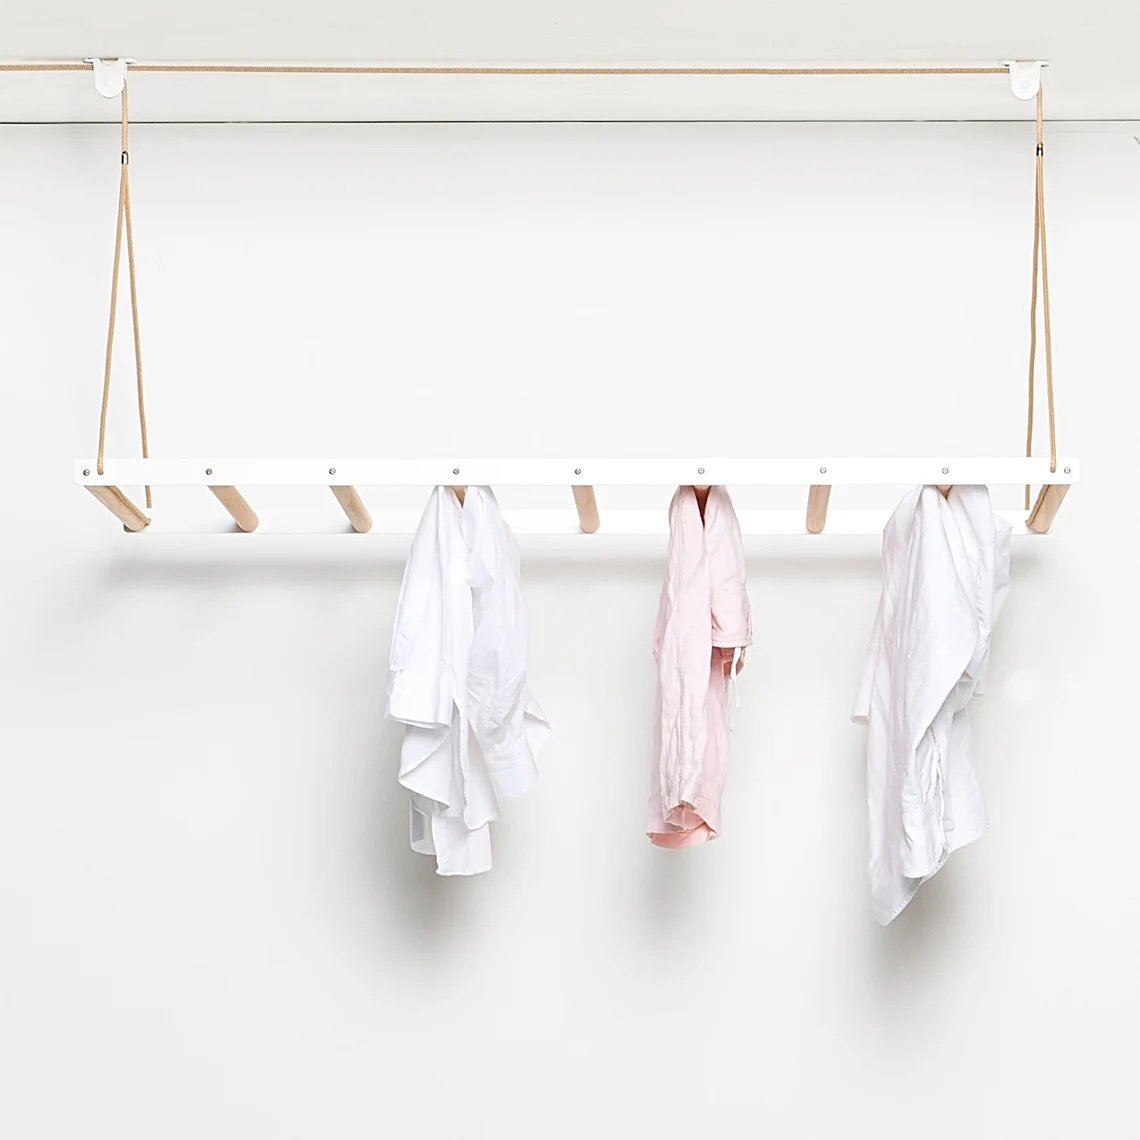 $360 | Hanging Laundry Drying Rack